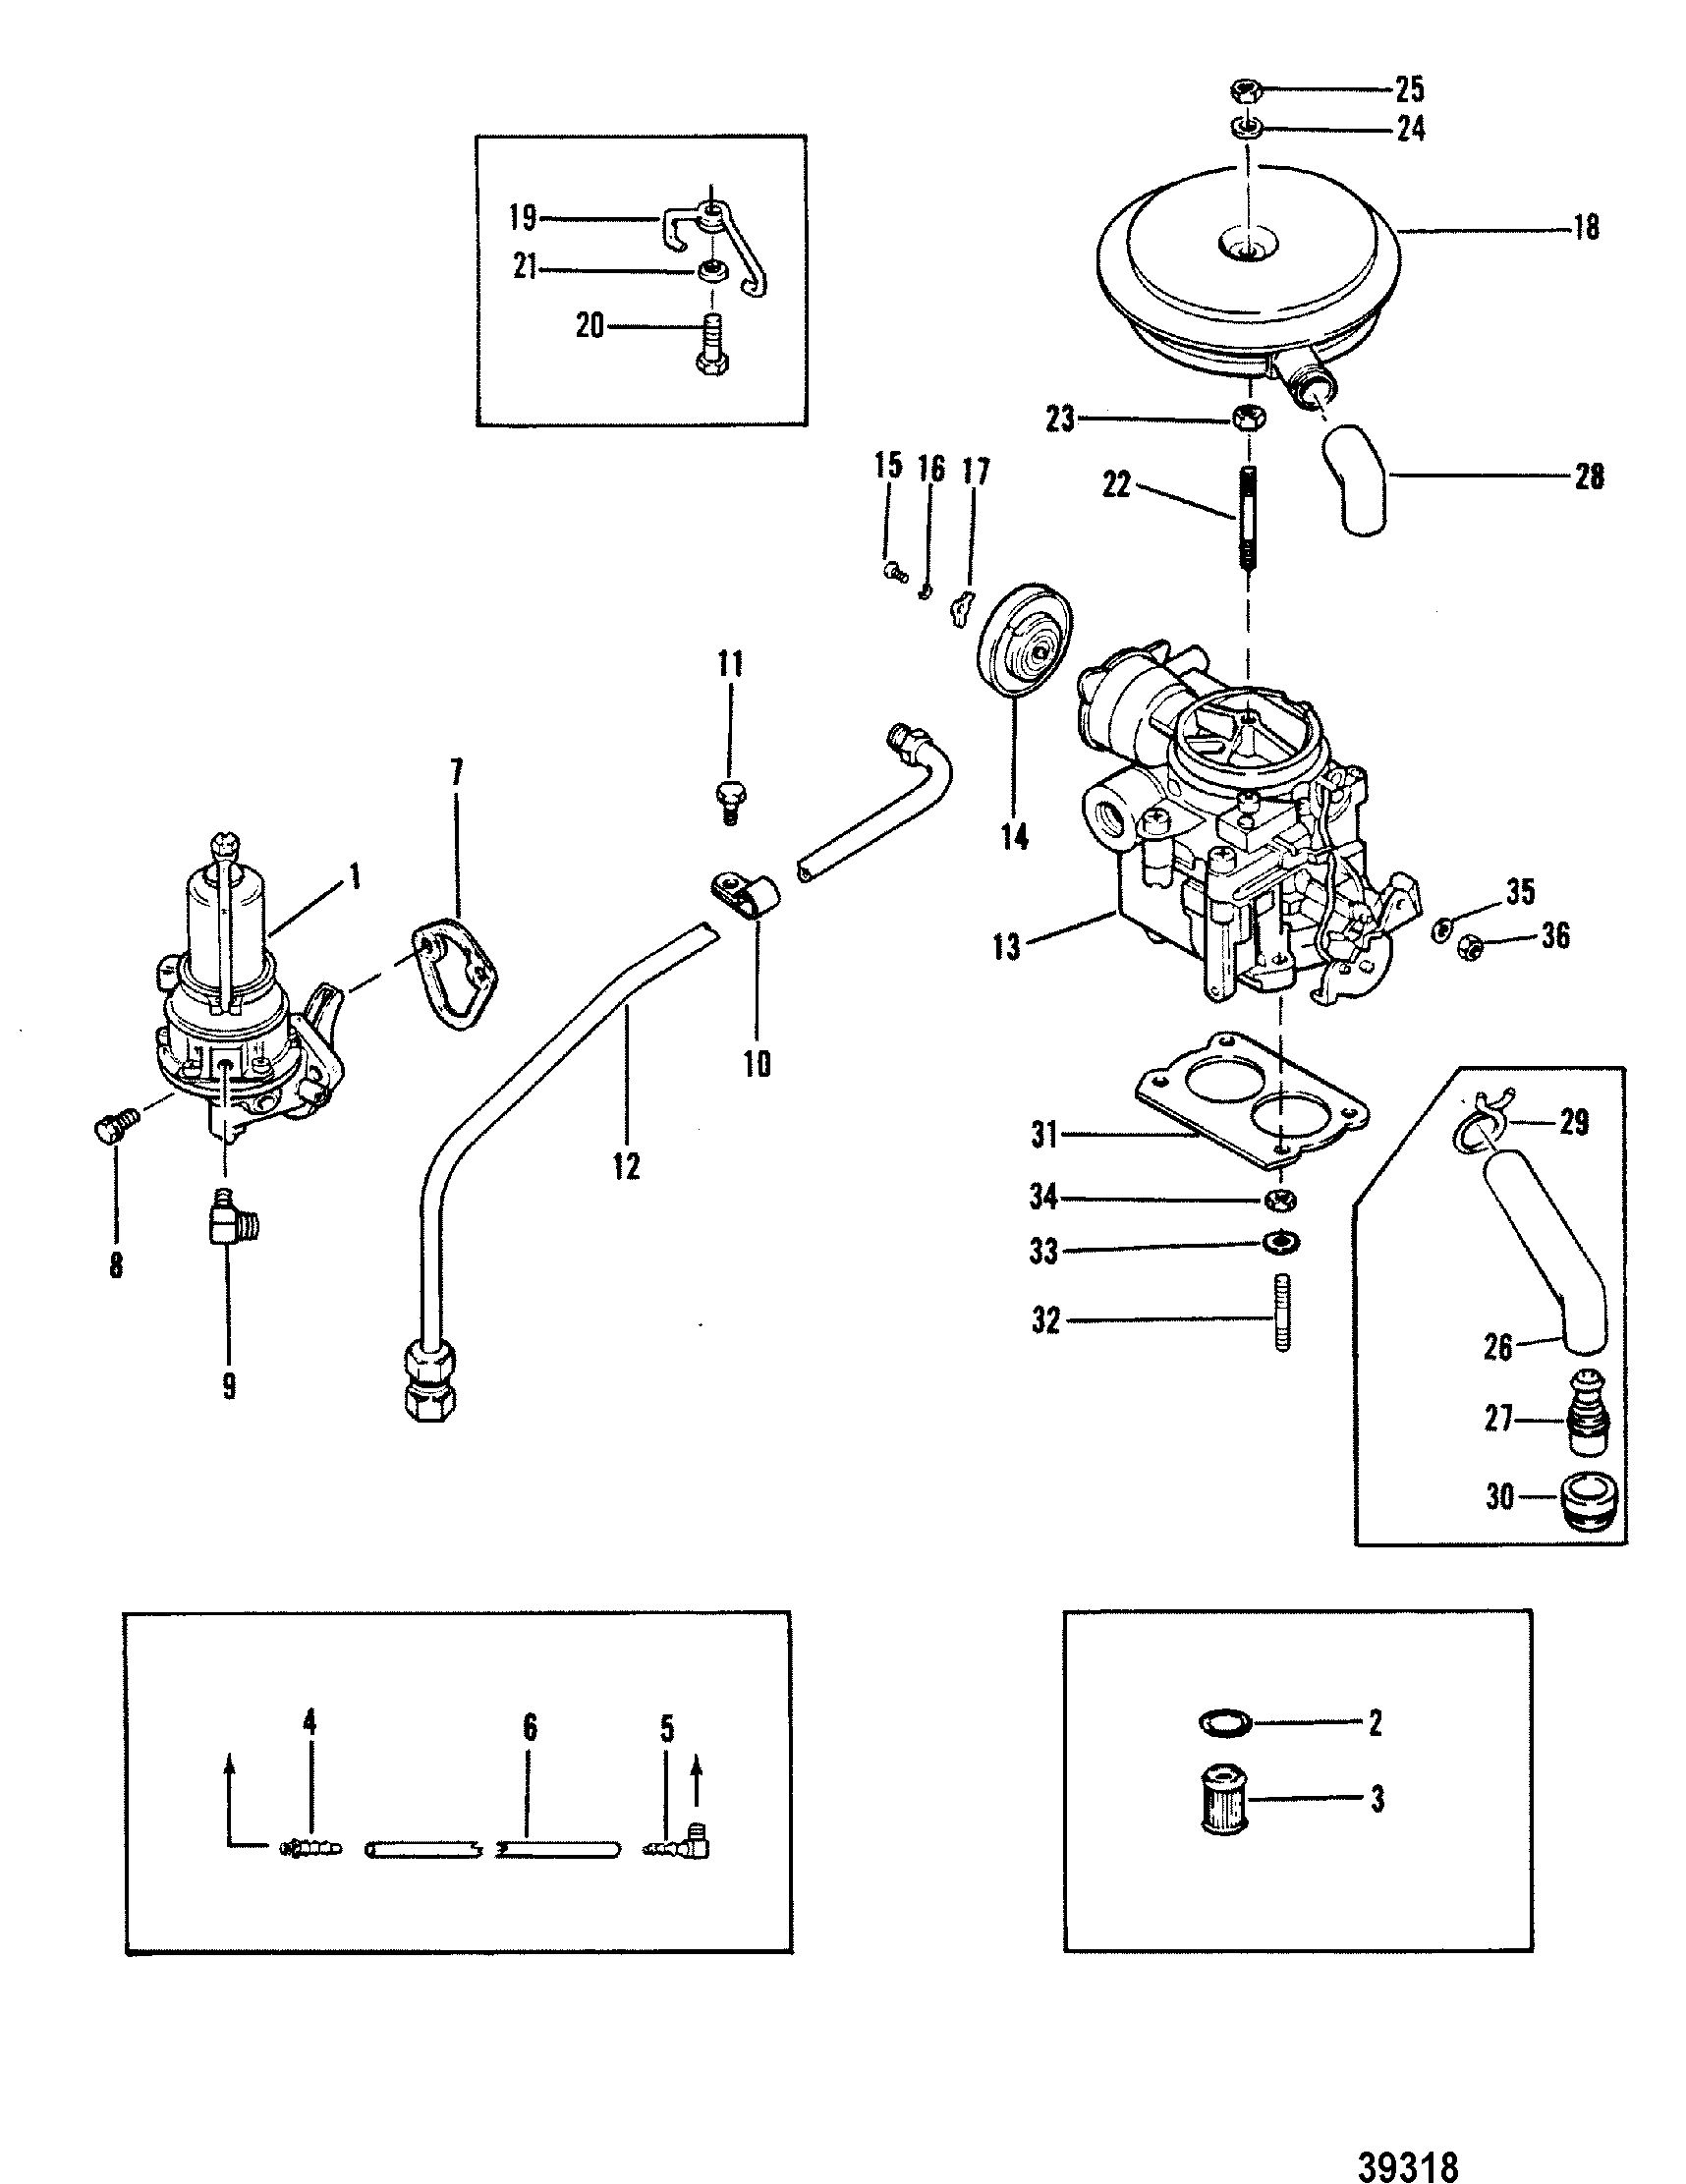 FUEL PUMP AND CARBURETOR(OLD DESIGN)